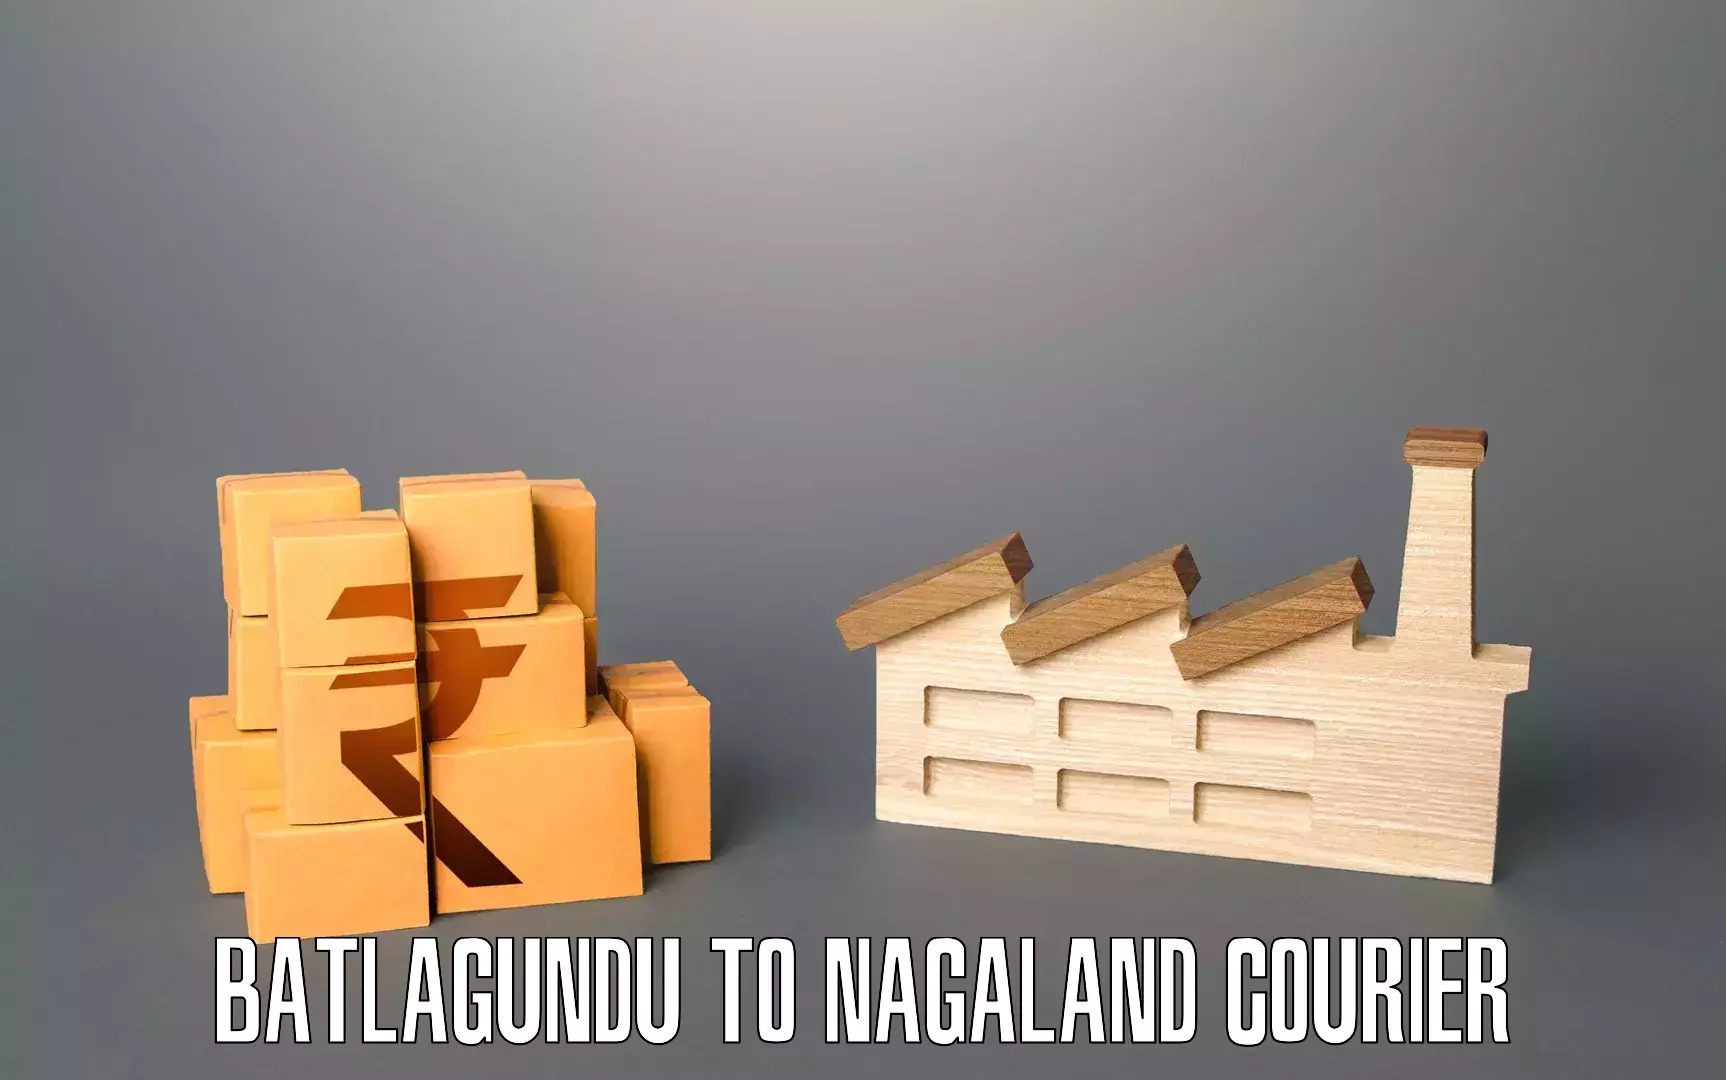 Quality moving company Batlagundu to Nagaland